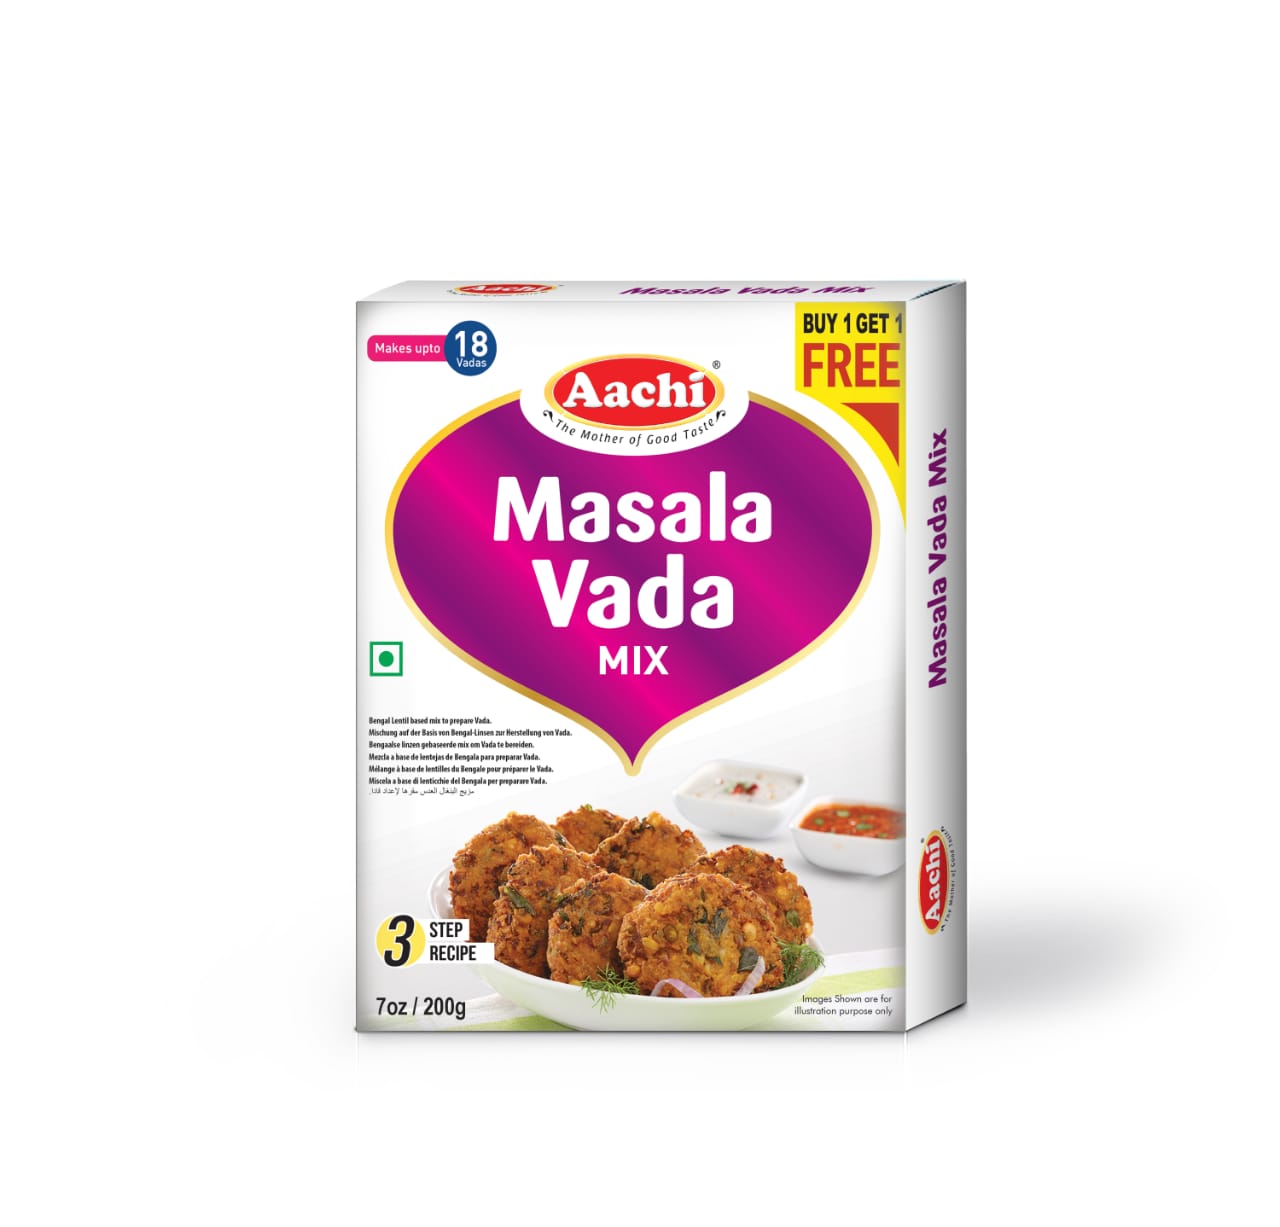 Aachi Masala Vada Mix
